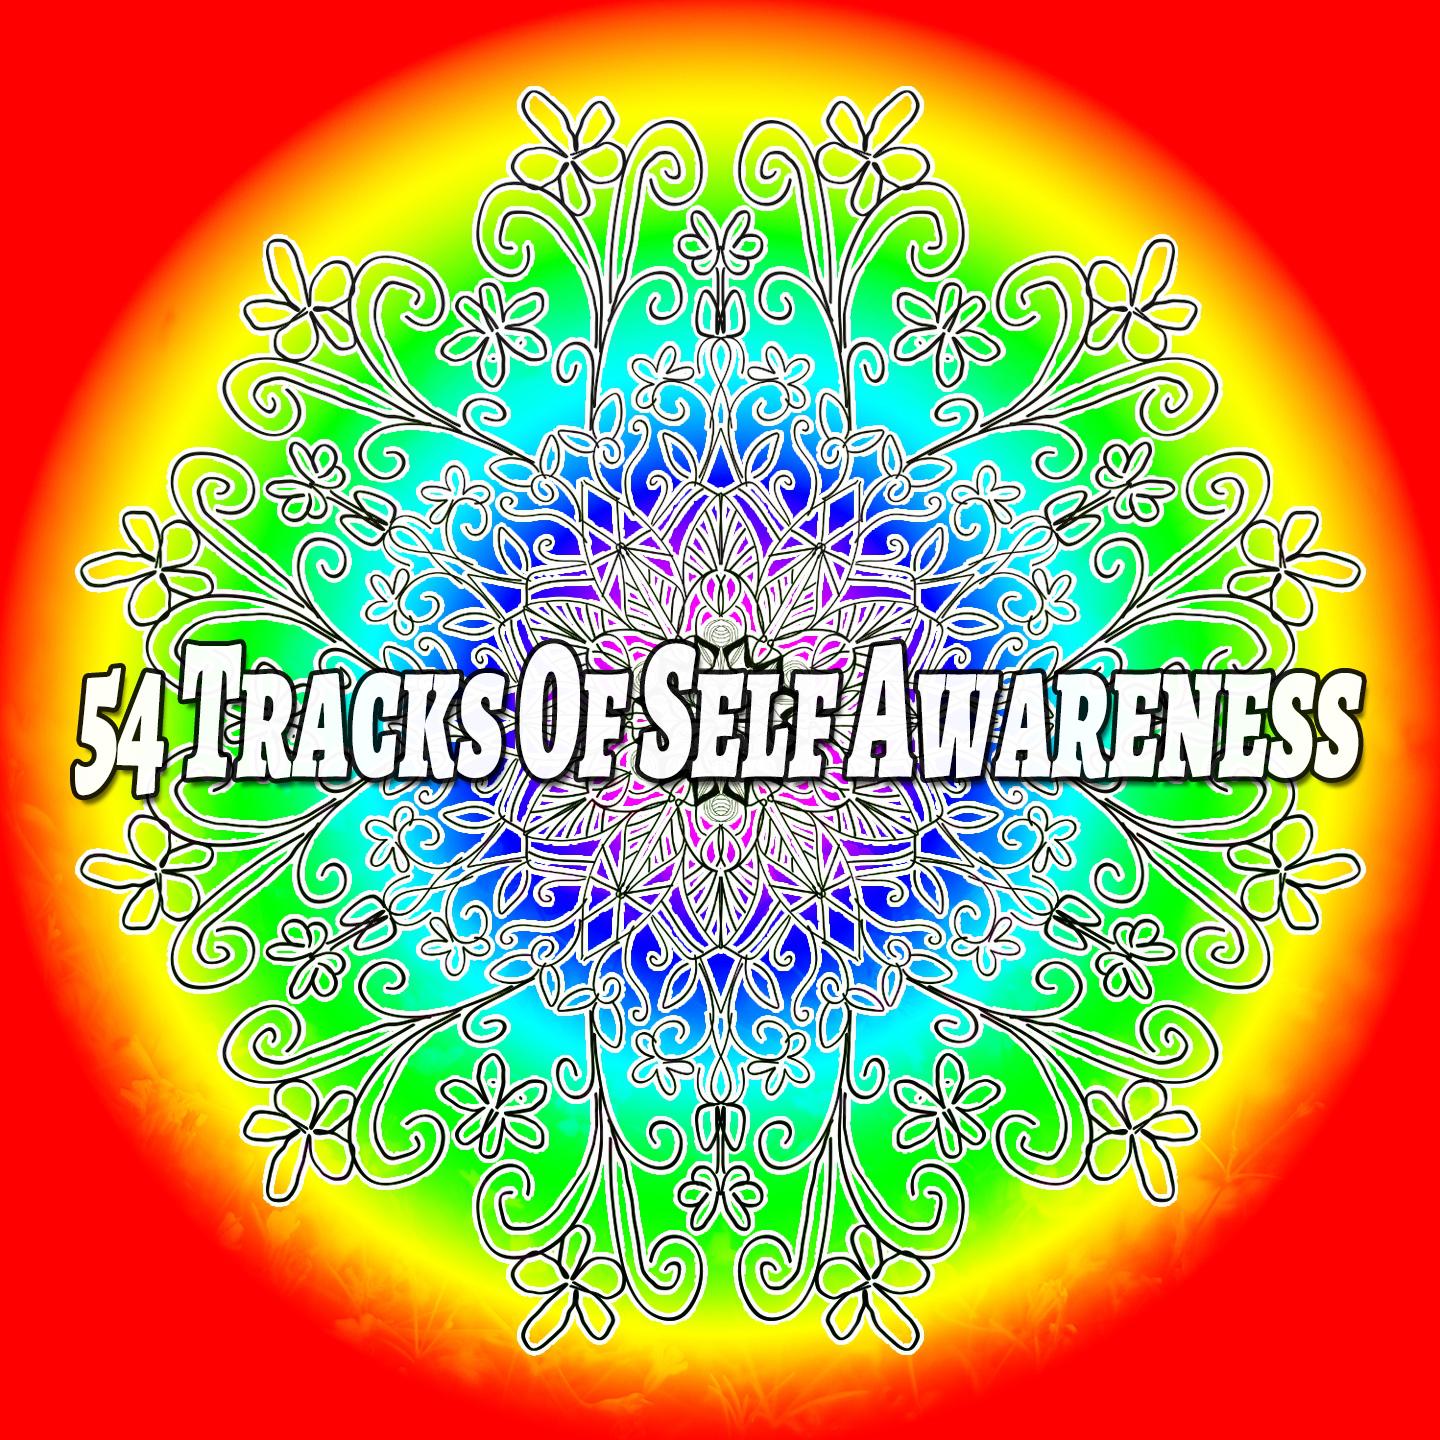 54 Tracks Of Self Awareness